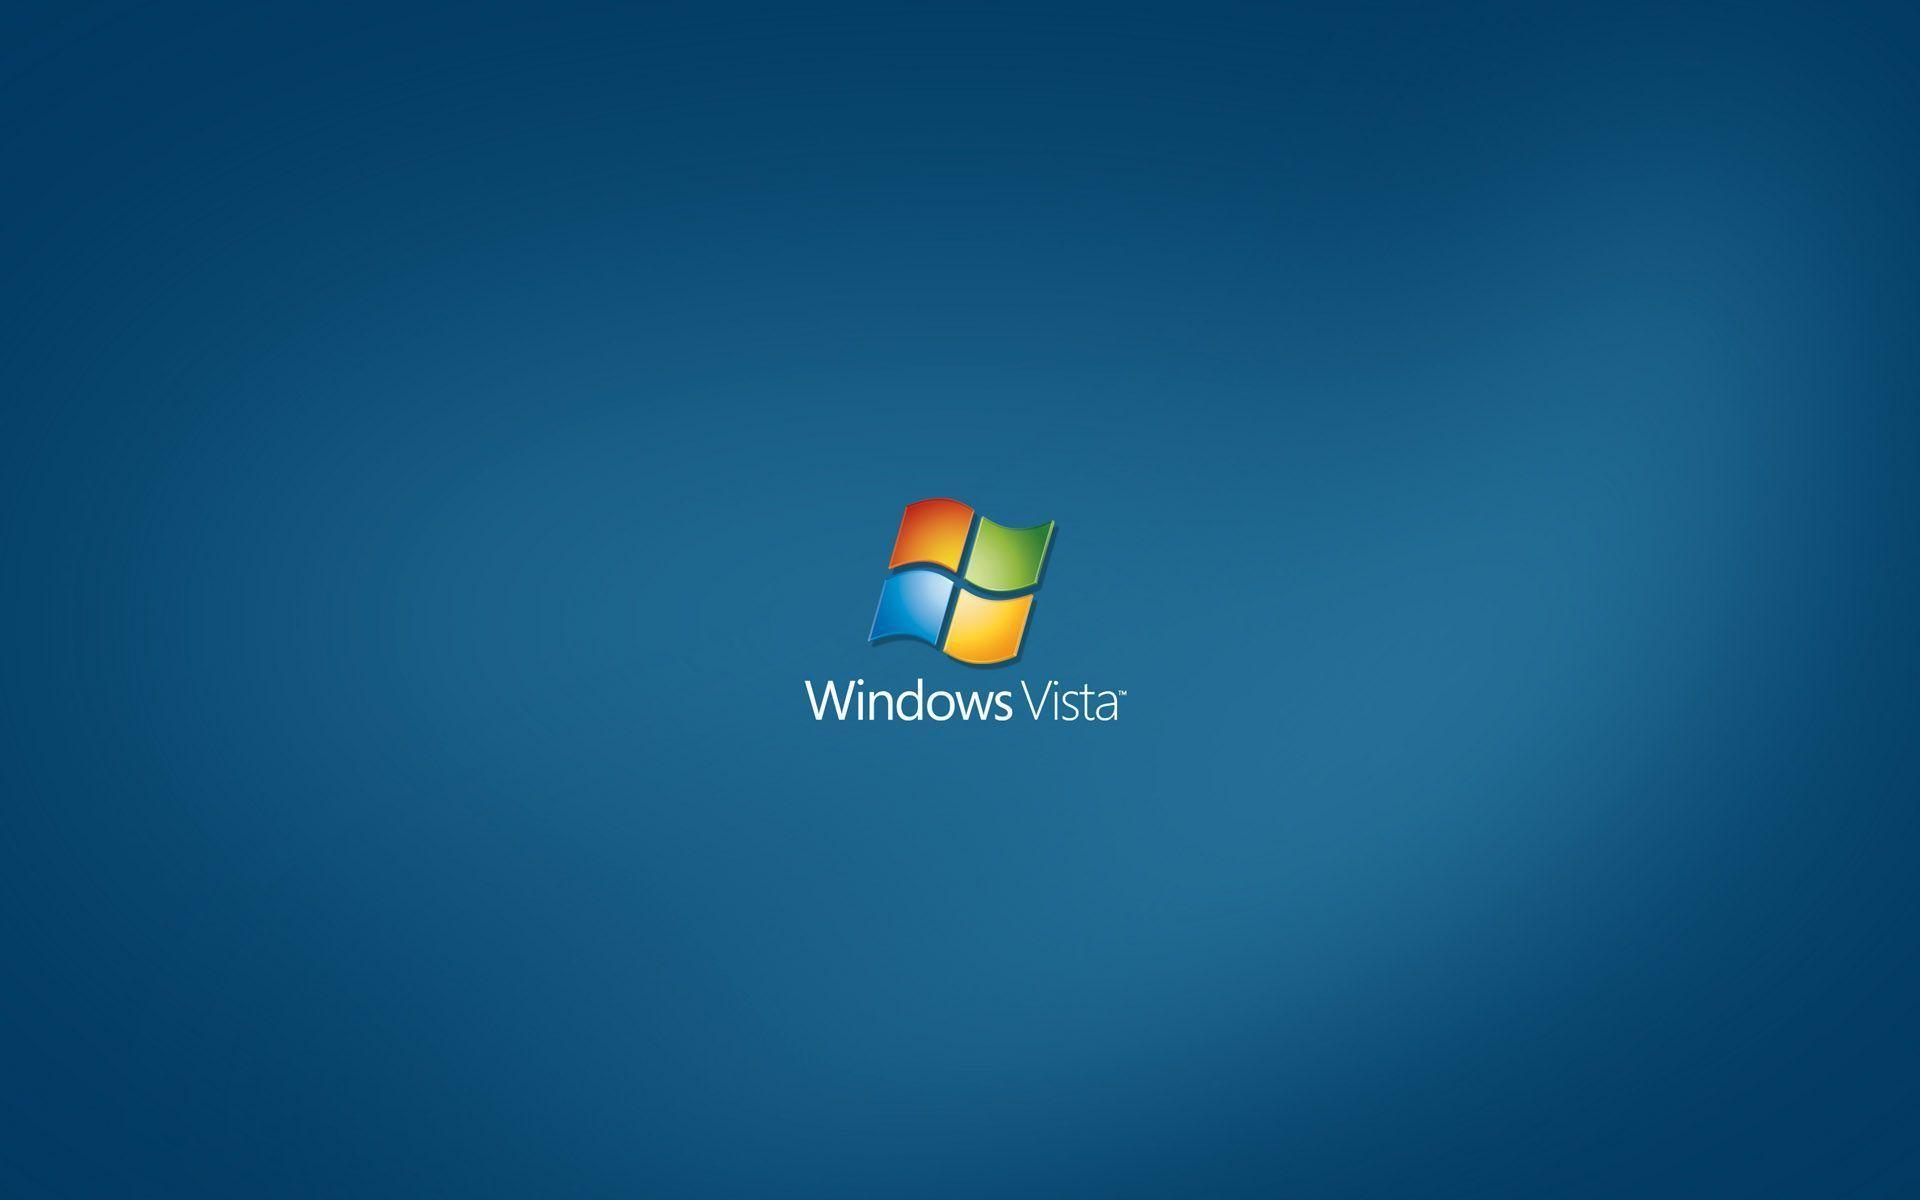 Free Download Win Vista Wallpaper in 1920x1200 resolutions